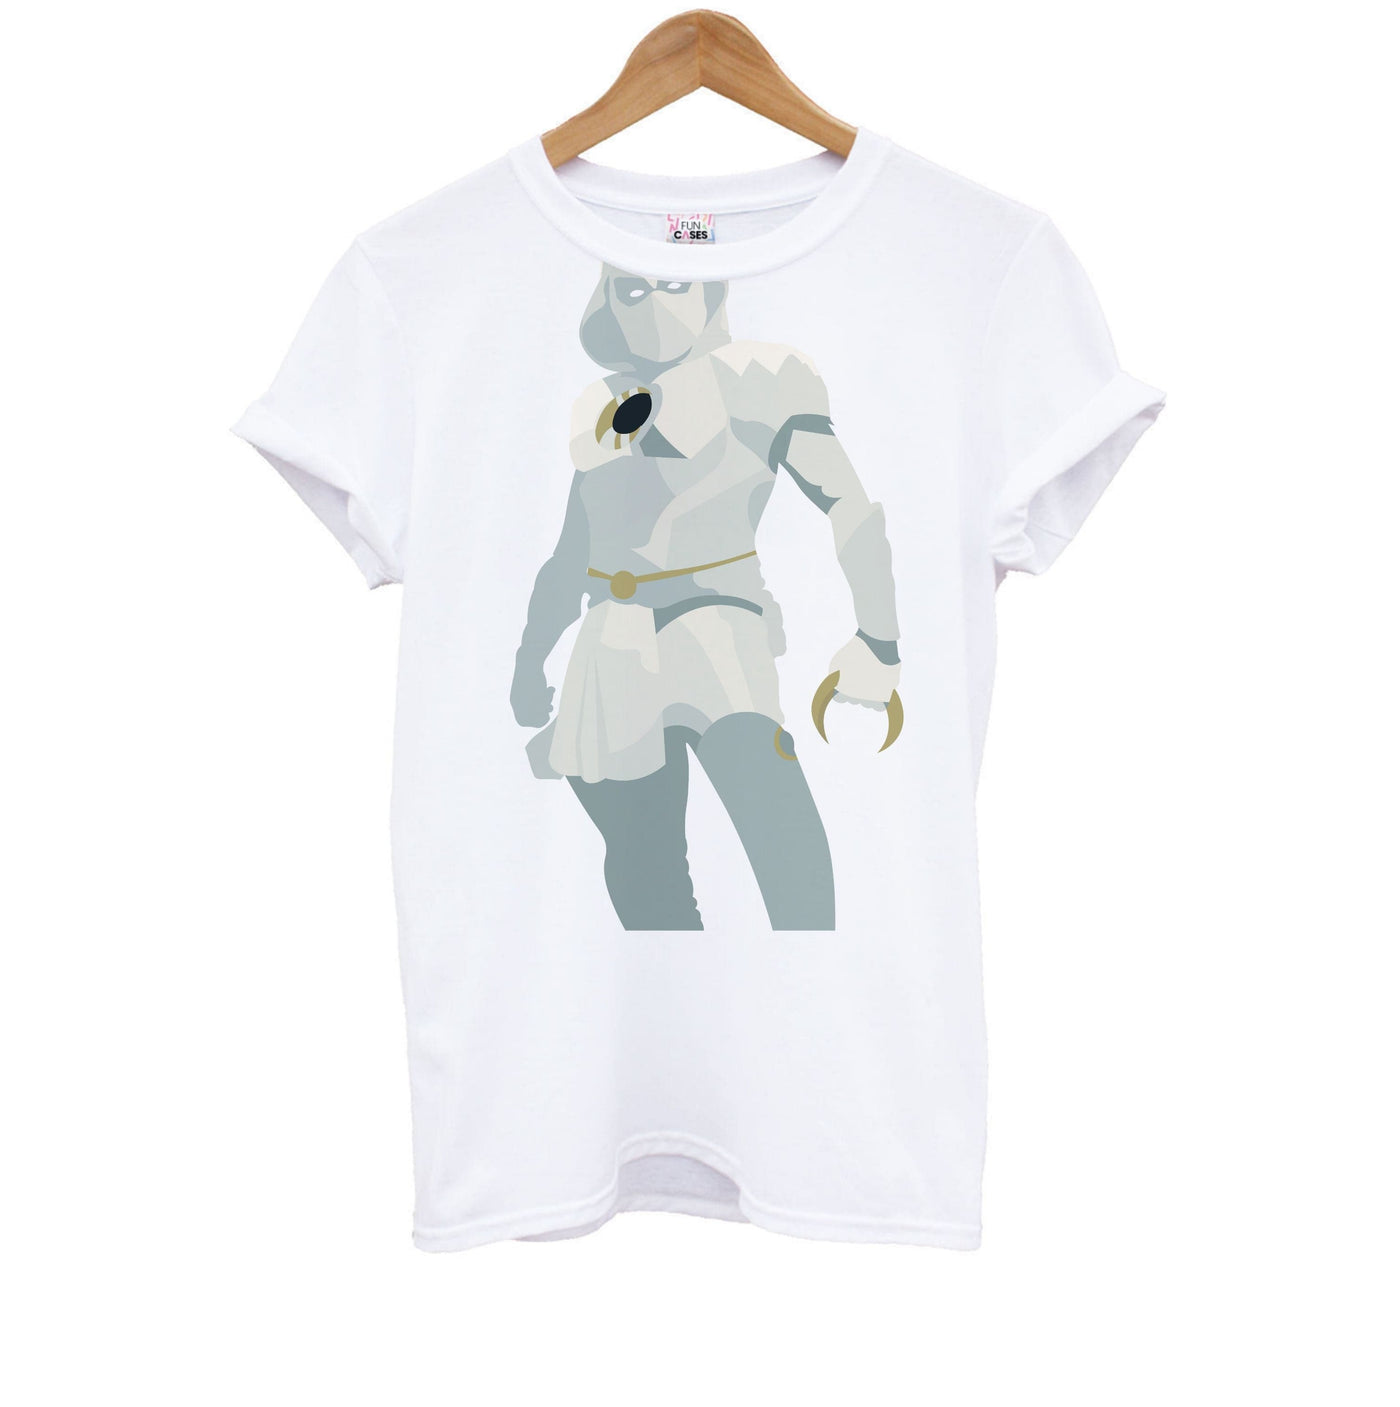 Suit - Moon Knight Kids T-Shirt